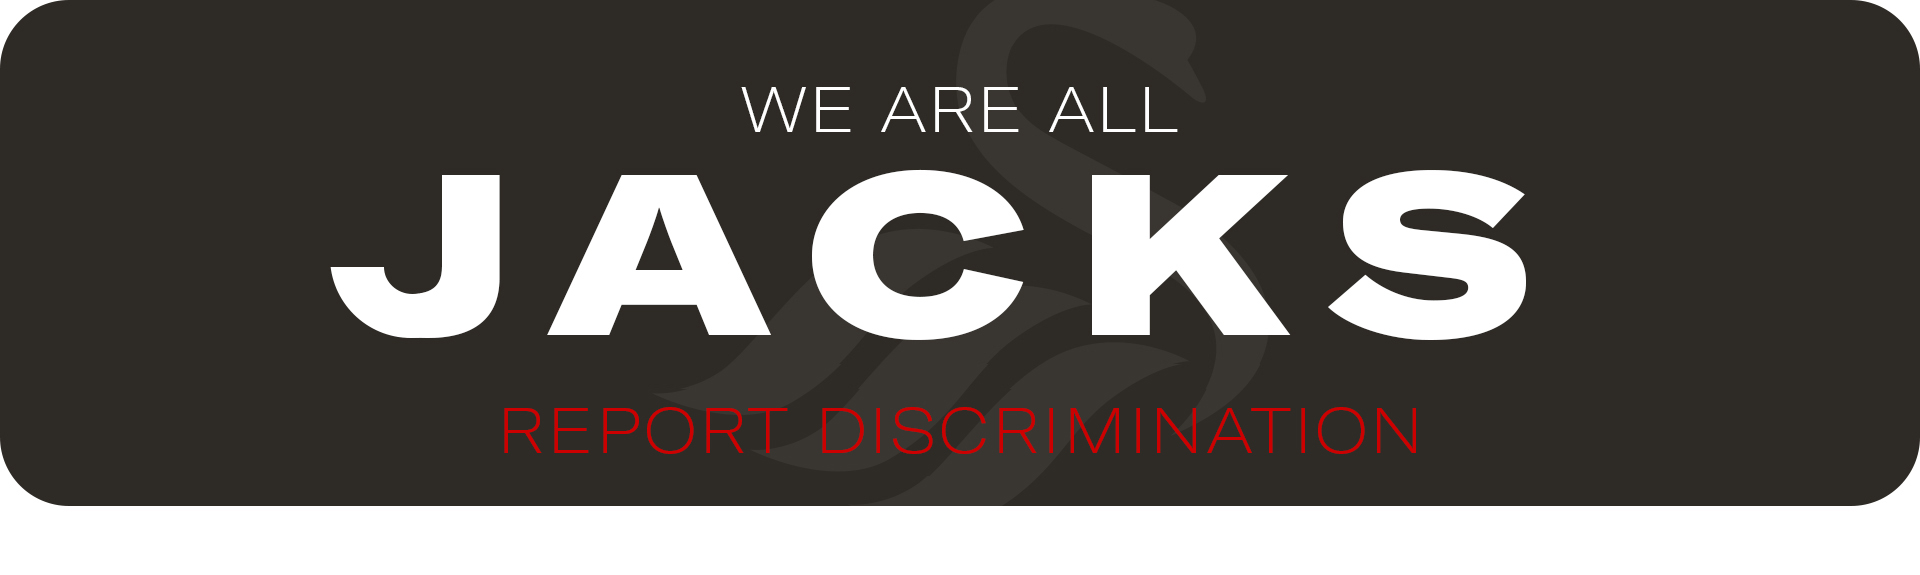 We are all Jacks - Report Discrimination